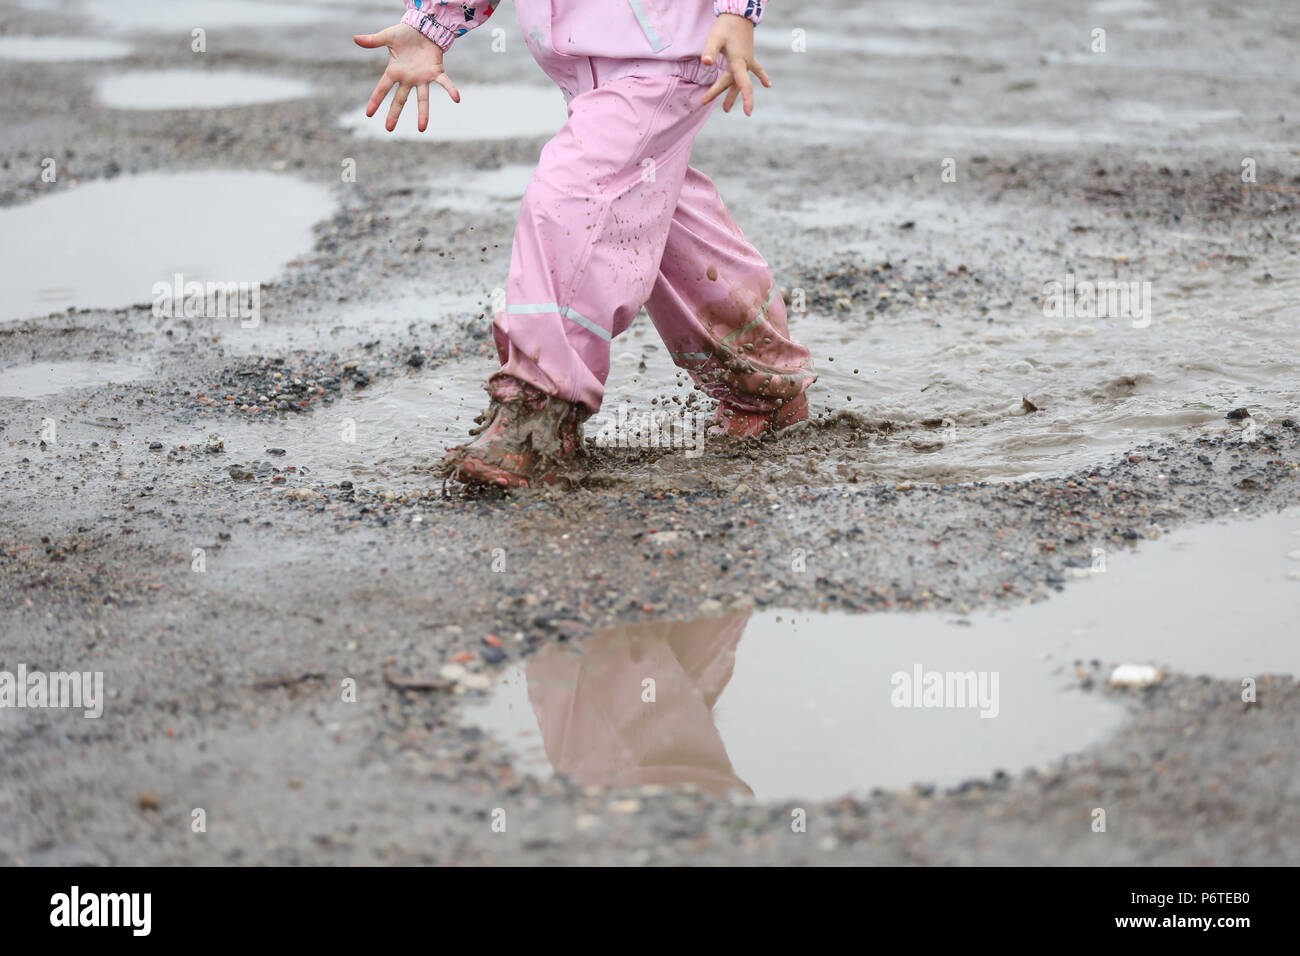 Hamburg, close-up, child in rain gear running through a puddle Stock Photo